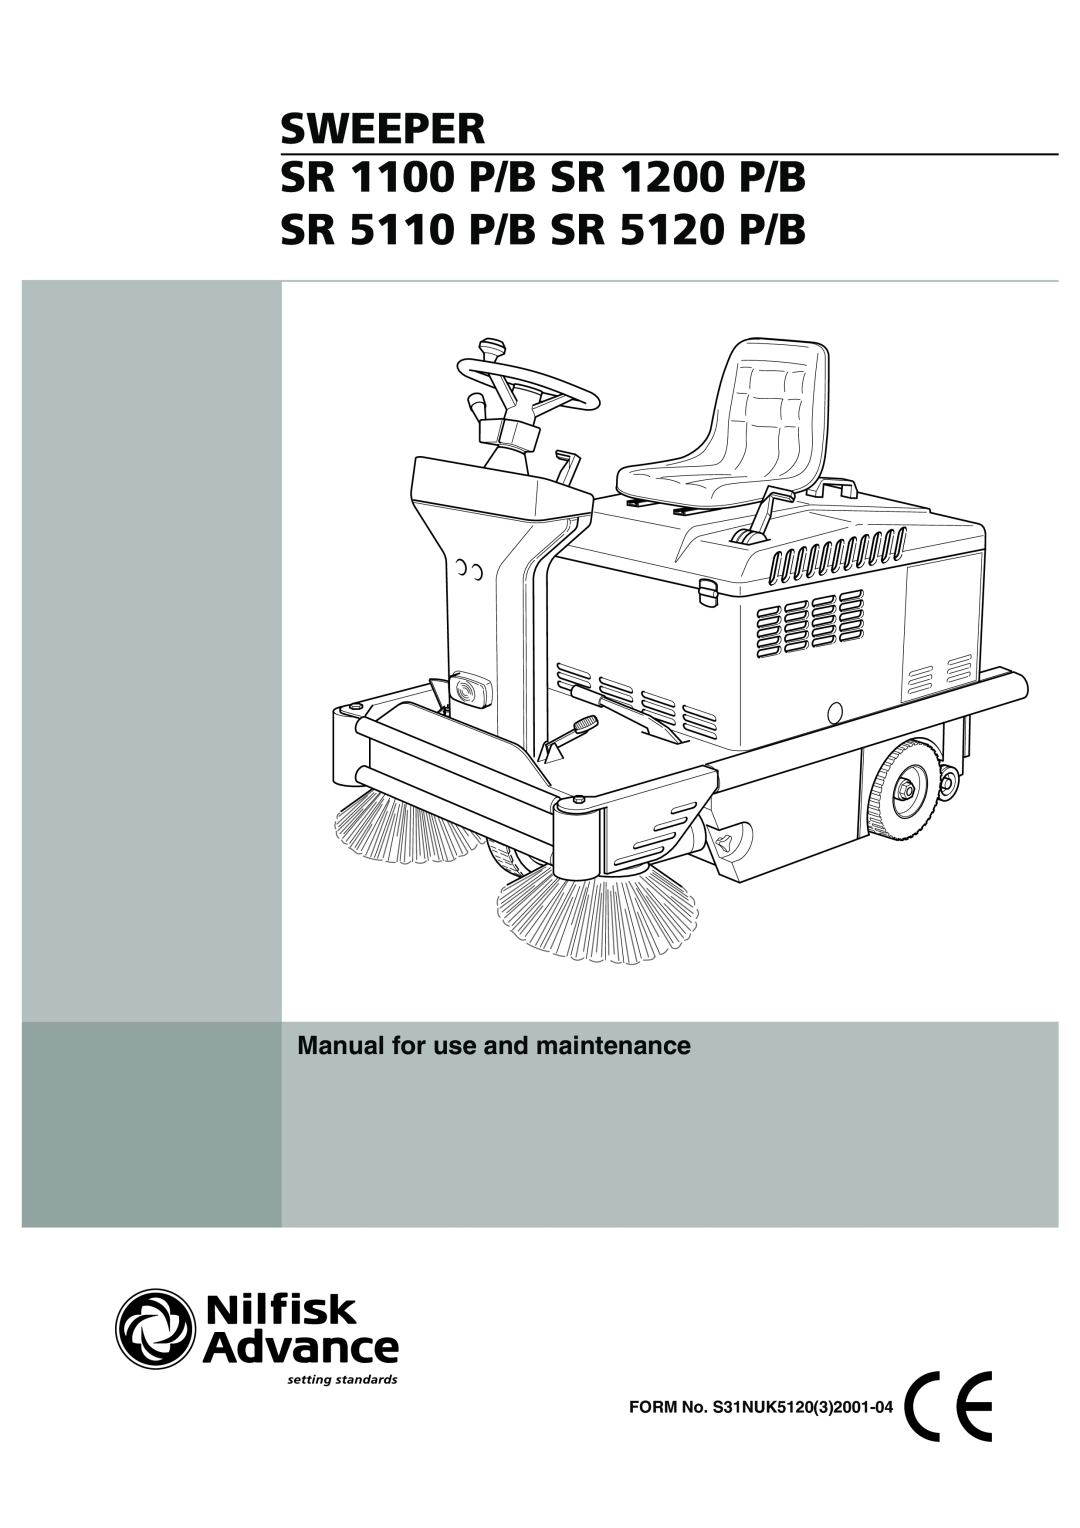 Nilfisk-Advance America manual Sweeper, SR 1100 P/B SR 1200 P/B SR 5110 P/B SR 5120 P/B, Manual for use and maintenance 